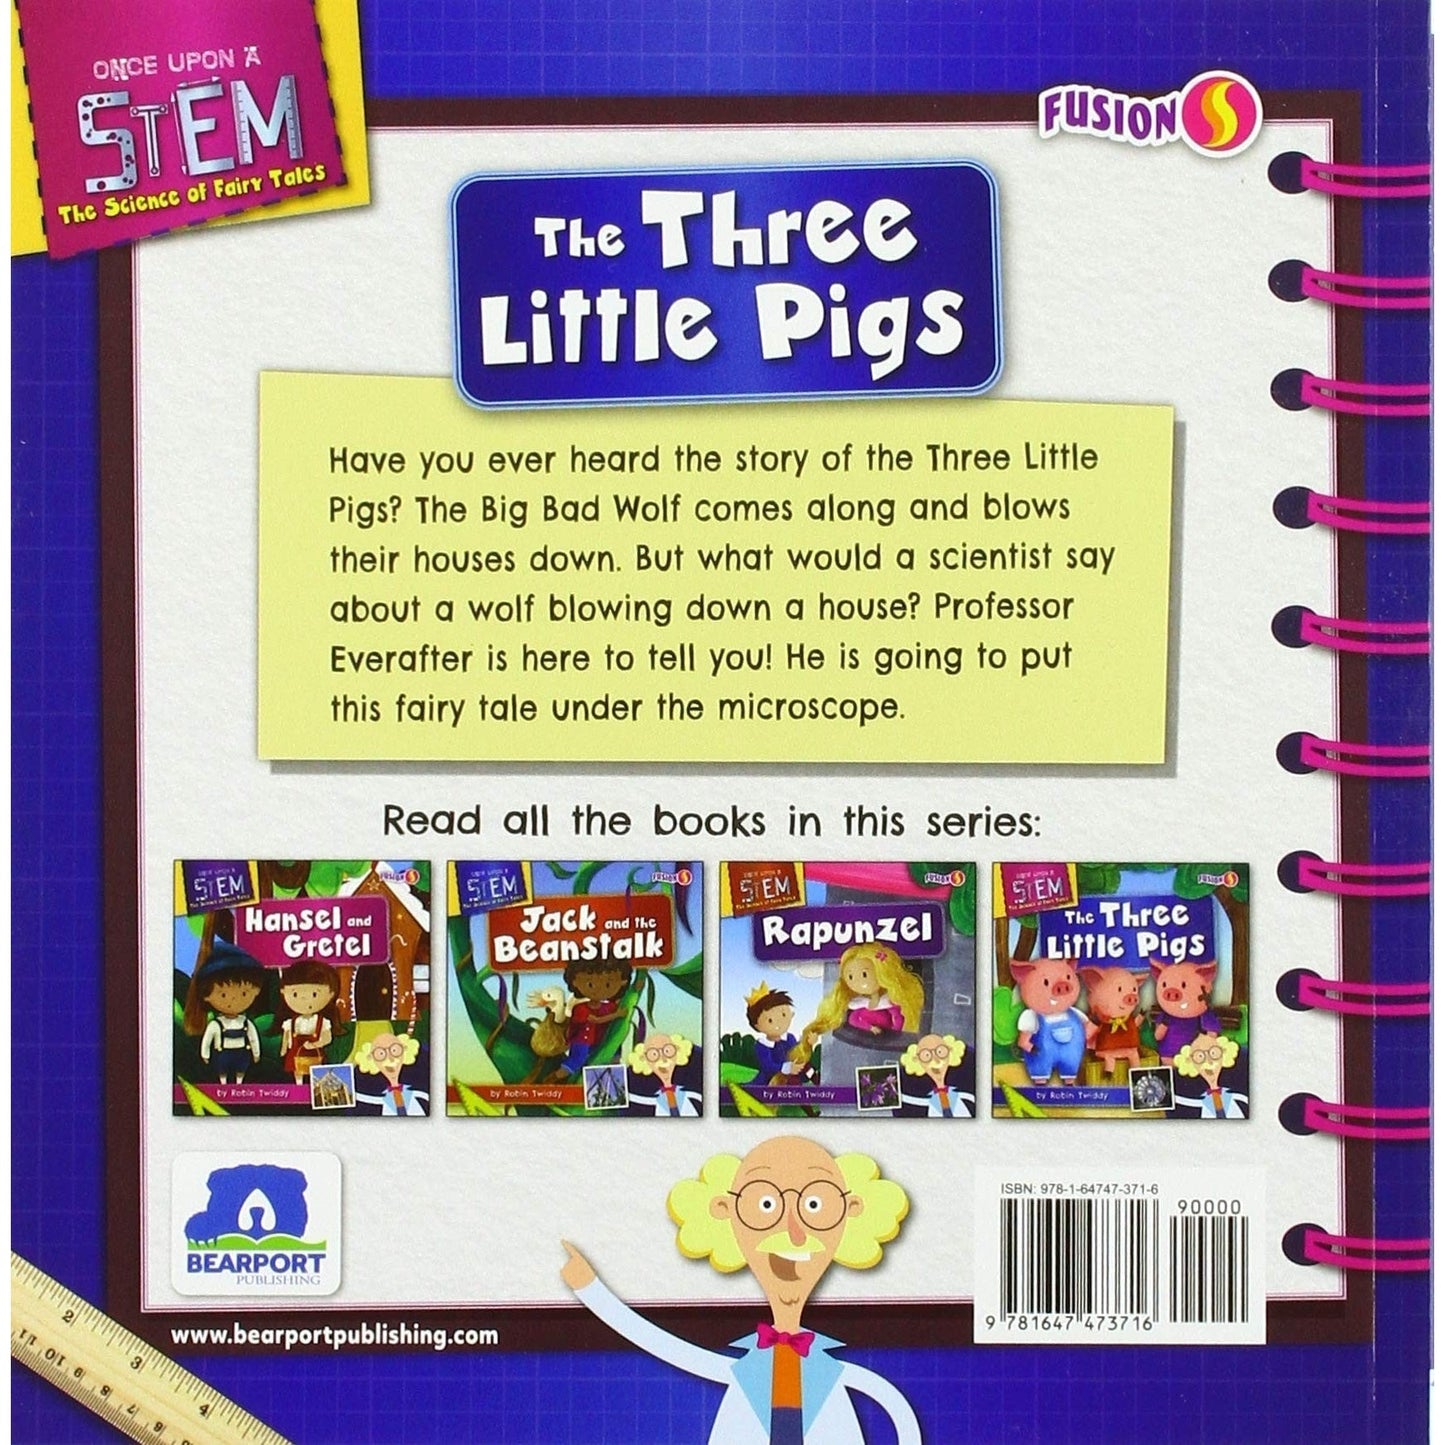 The Three Little Pigs - Robin Twiddy